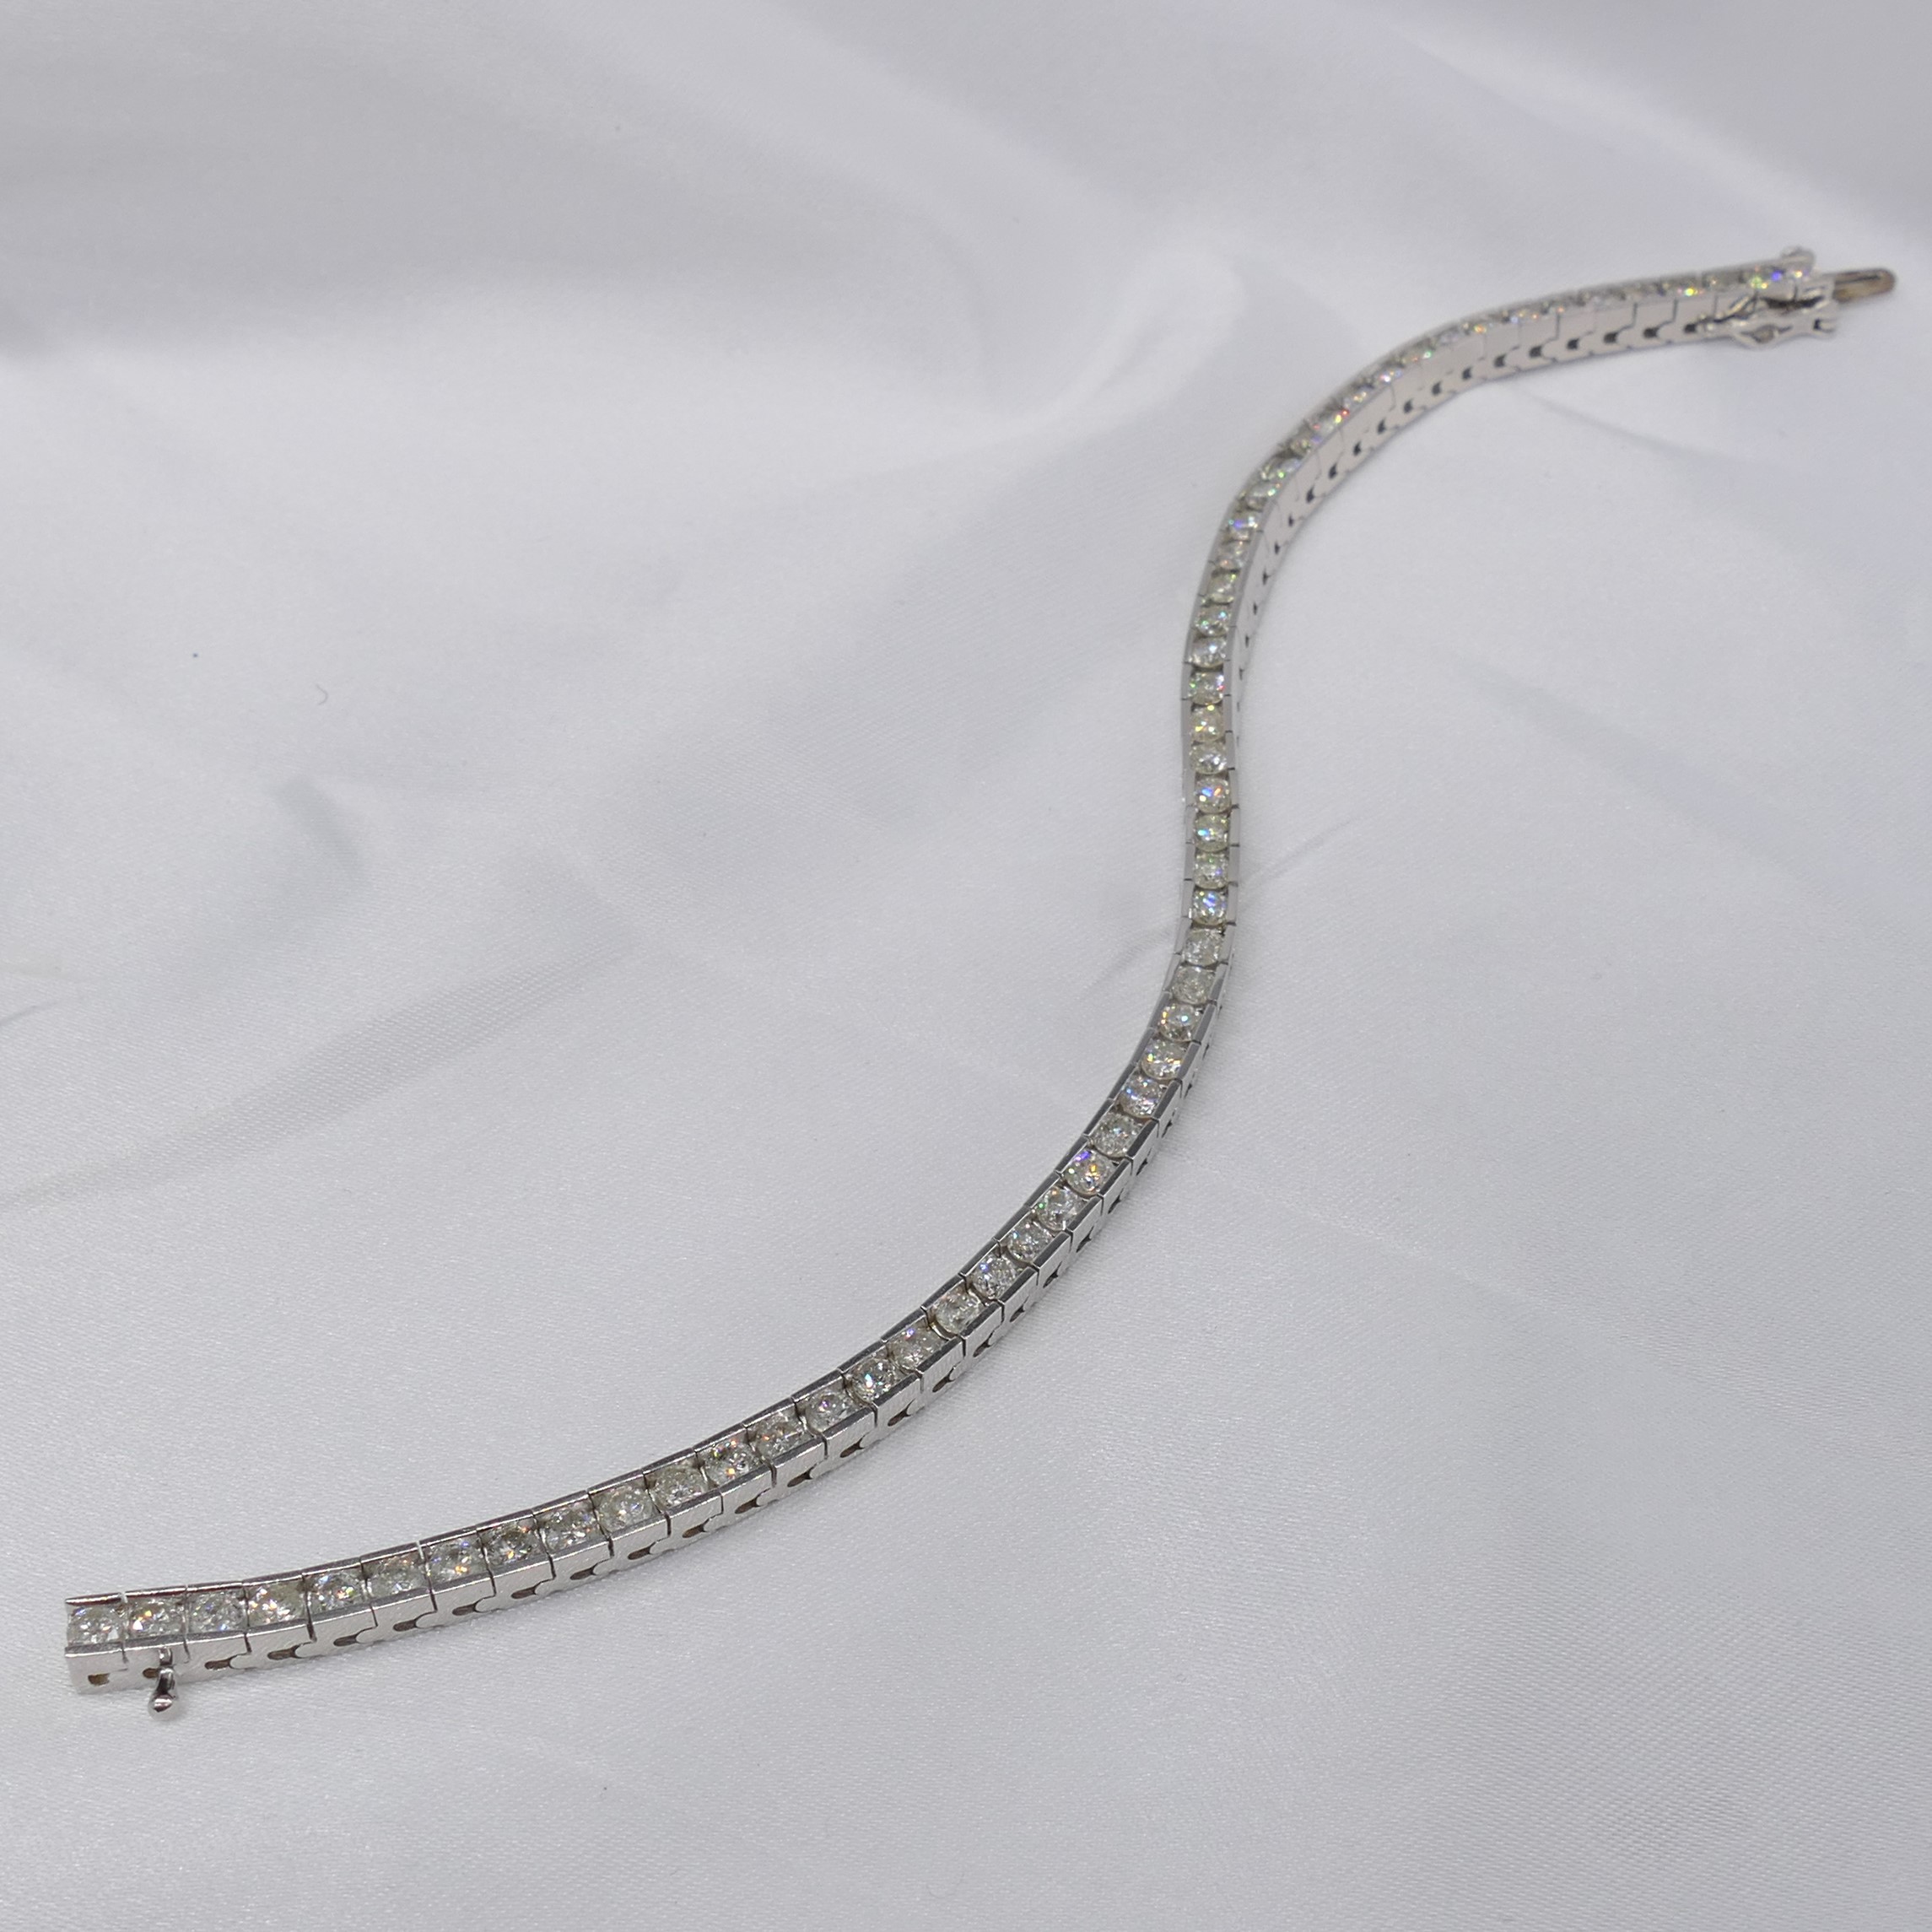 4.85 Carat Round Brilliant-Cut Diamond Bracelet In 14K White Gold - Image 7 of 8